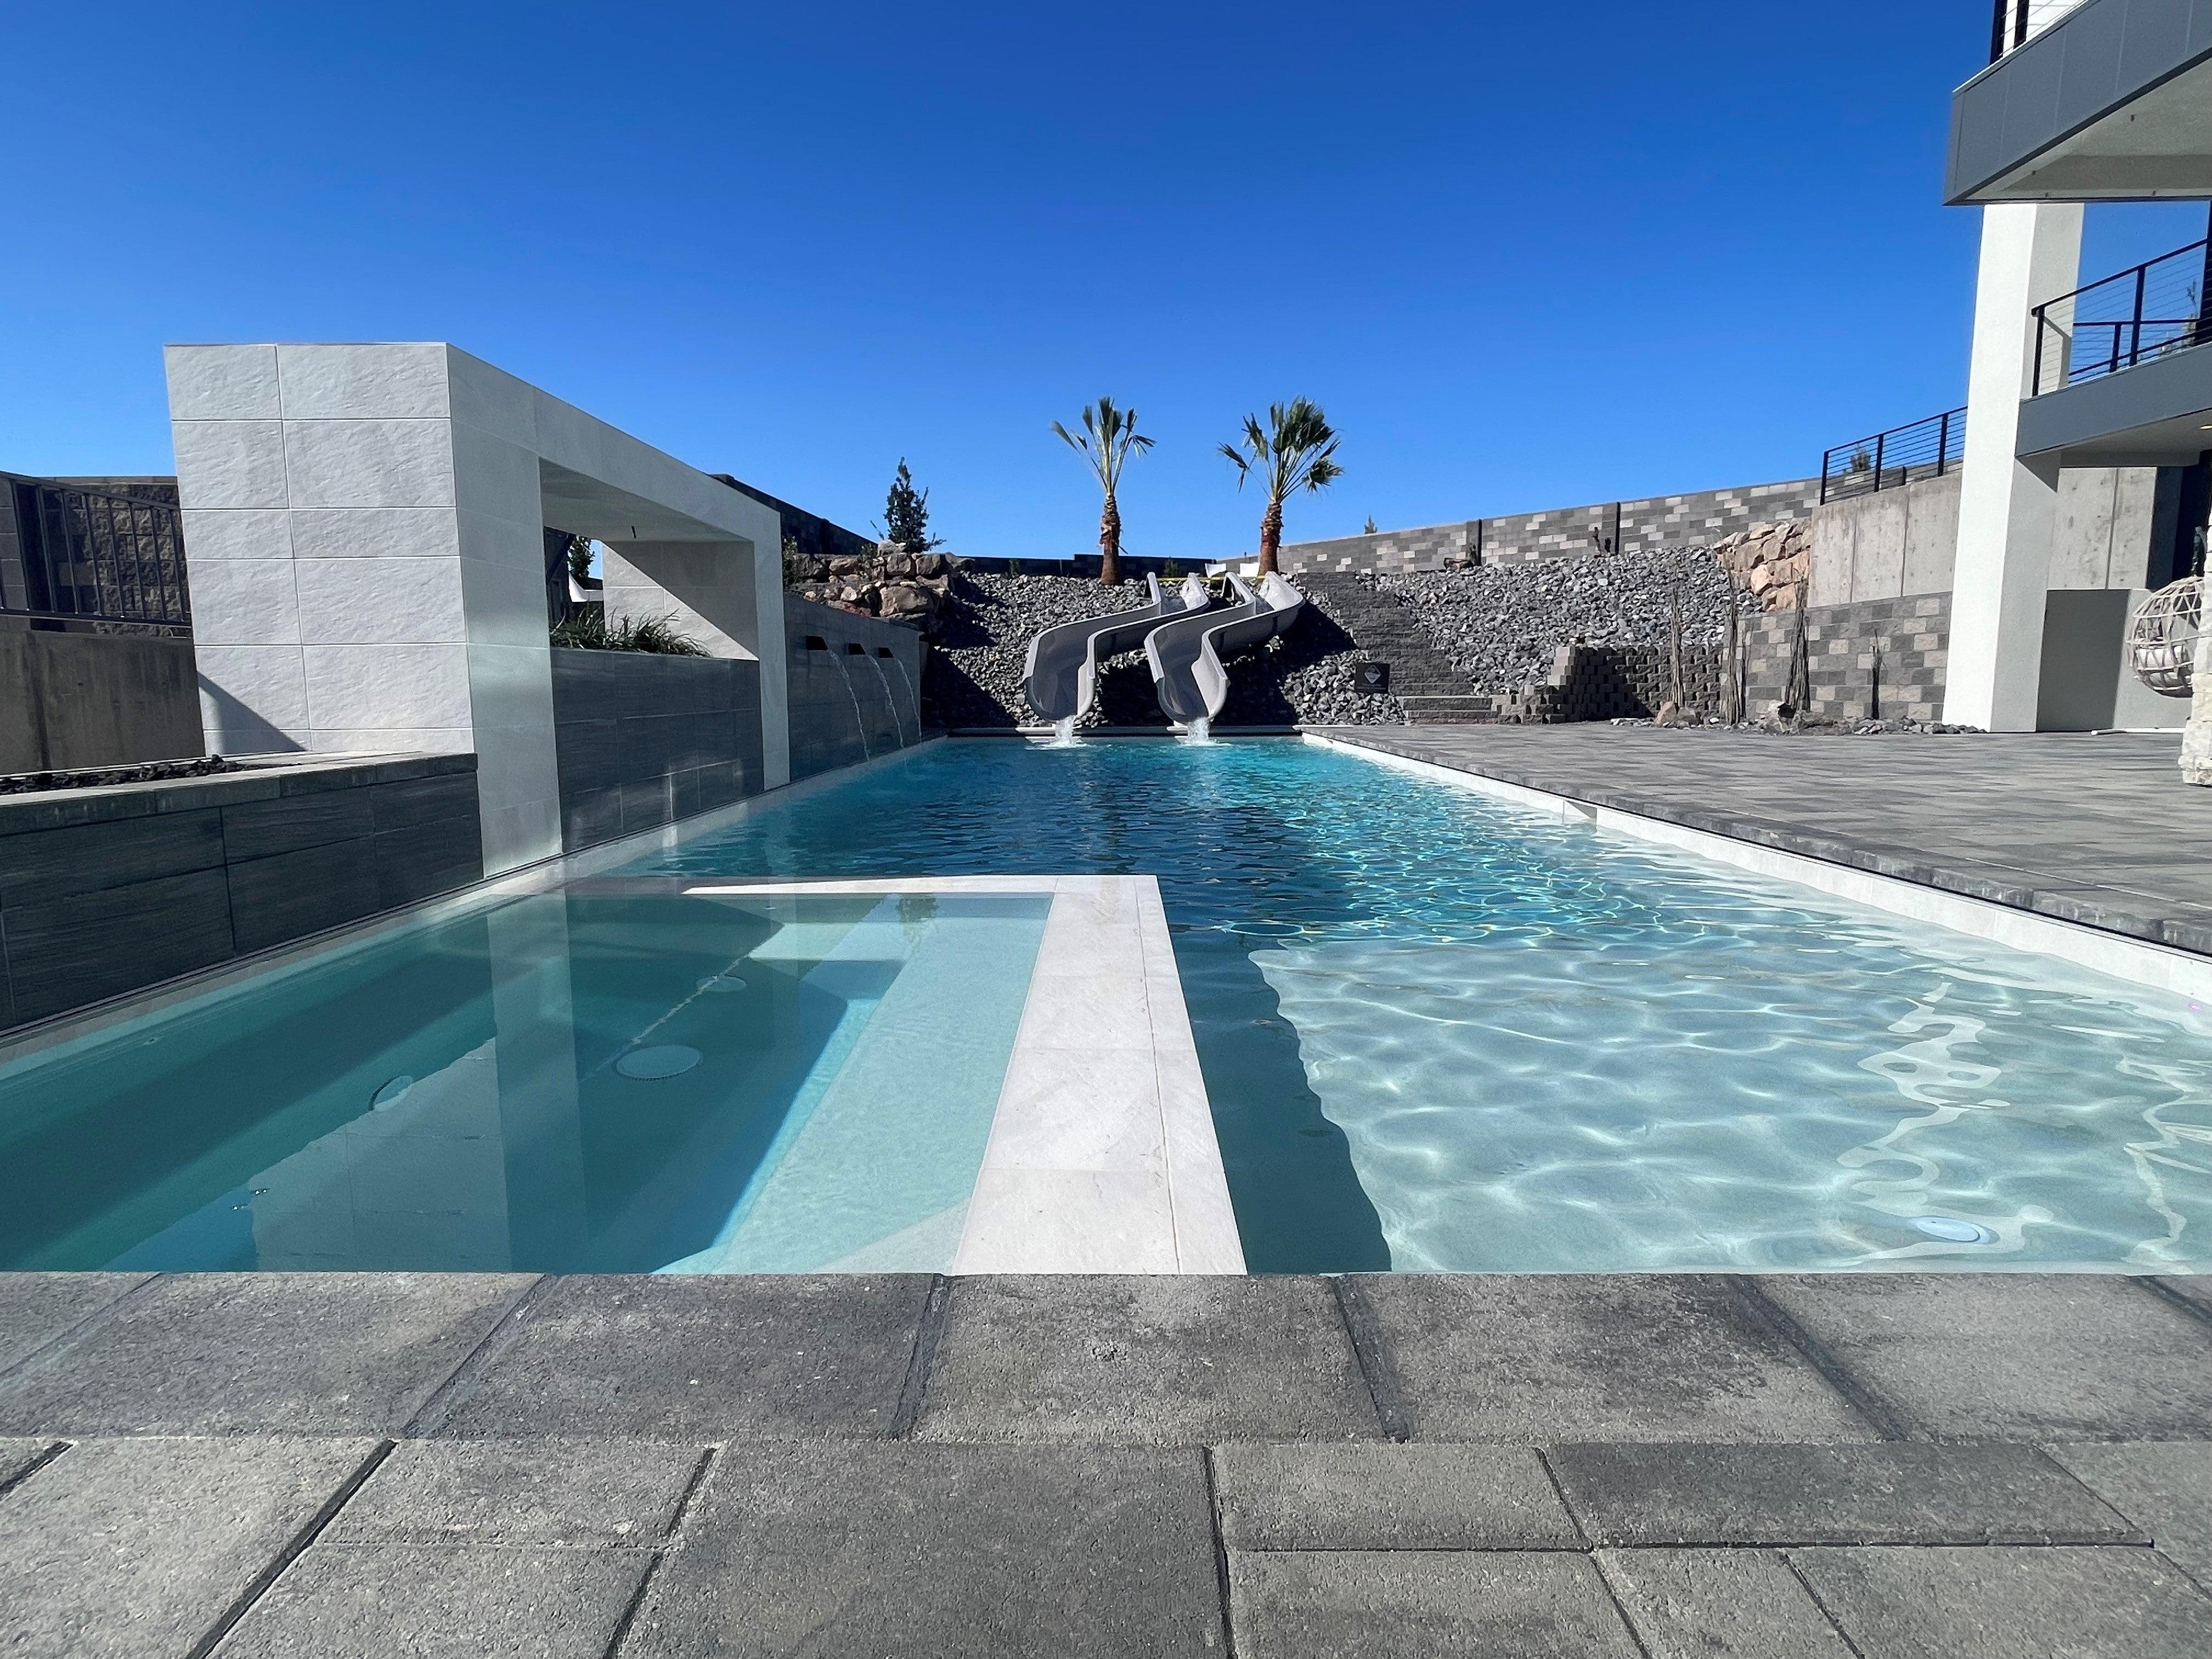 New Pool Construction - blueglassplaster